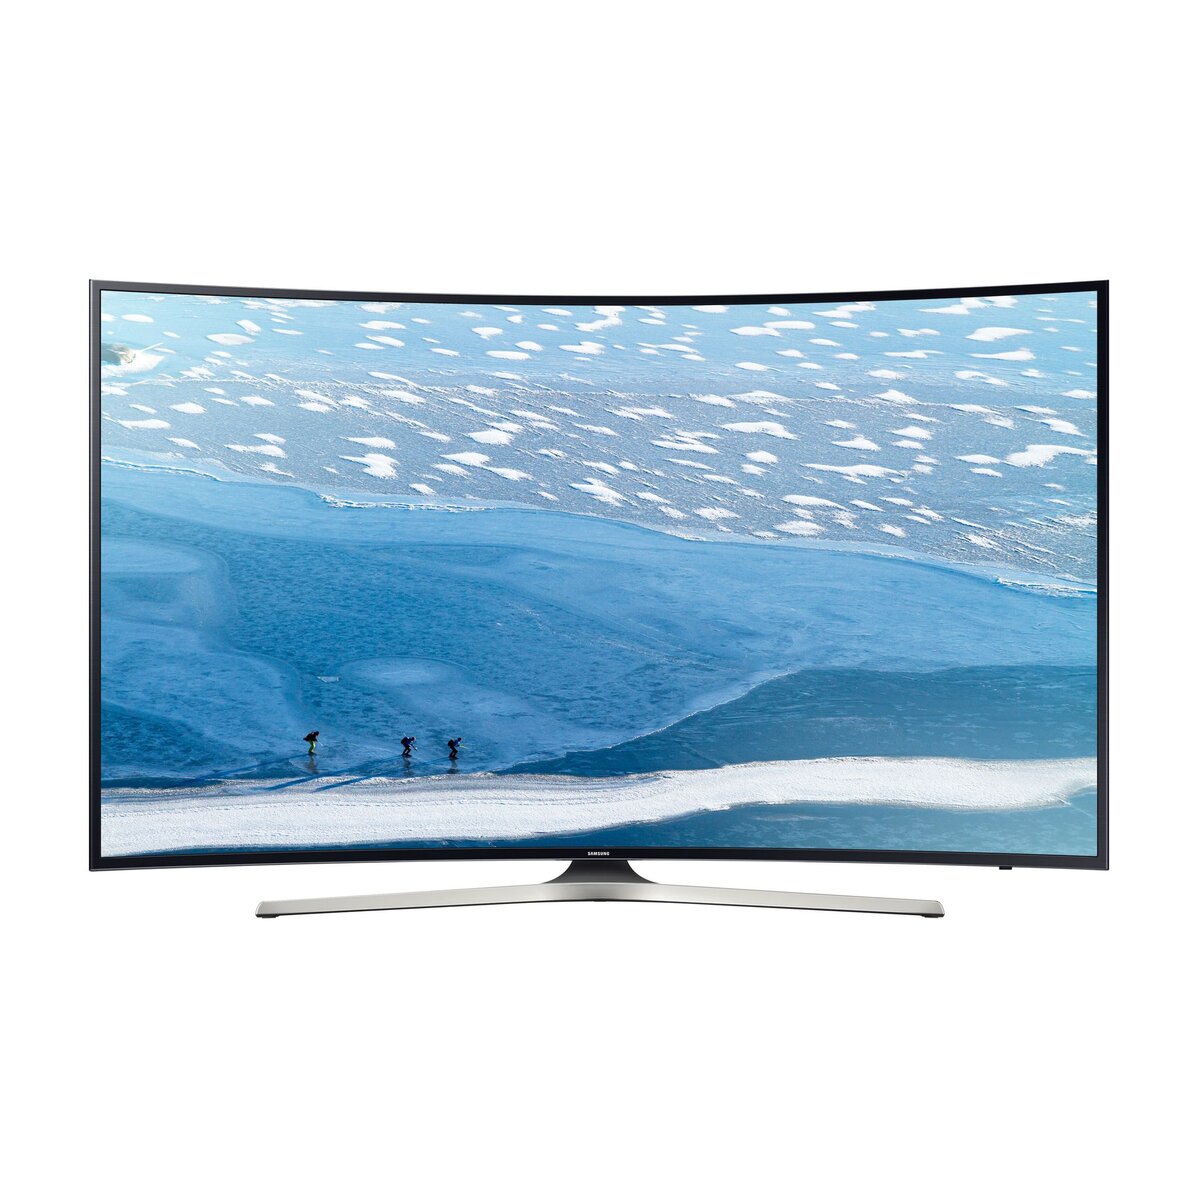 SAMSUNG UE65KU6100 - TV - LED - Ultra HD - 163 cm / 65 pouces - Incurvé - Smart TV